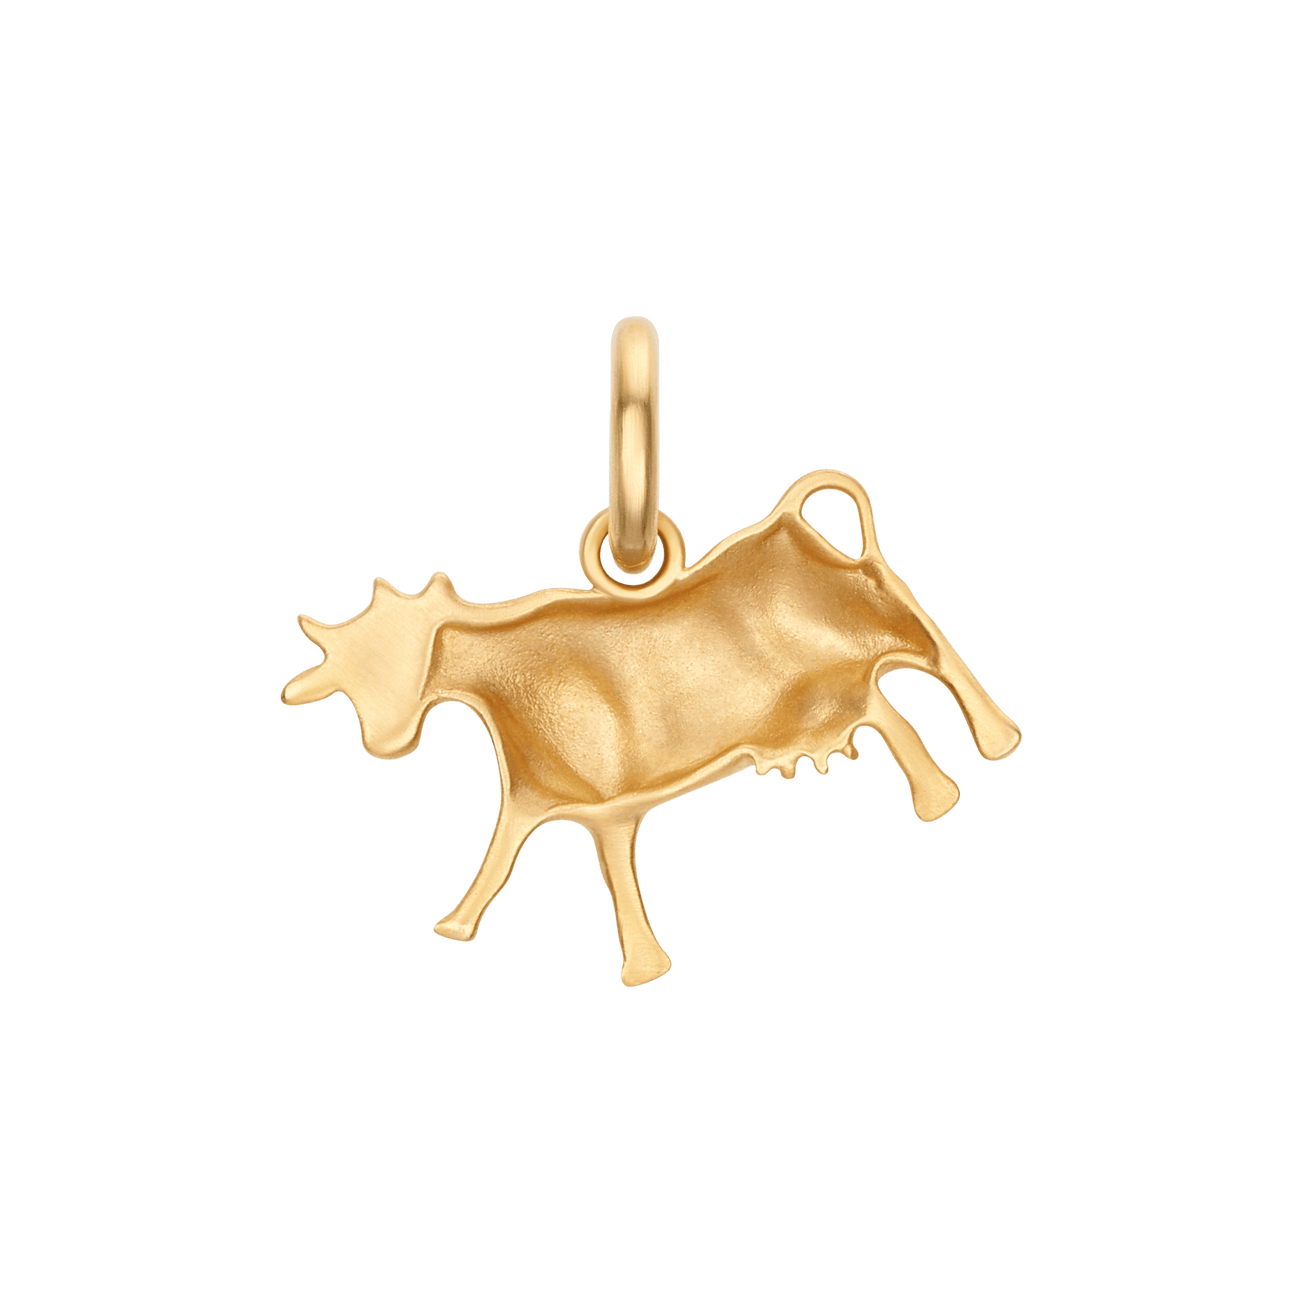 Dimensional Cow Charm - Rondel